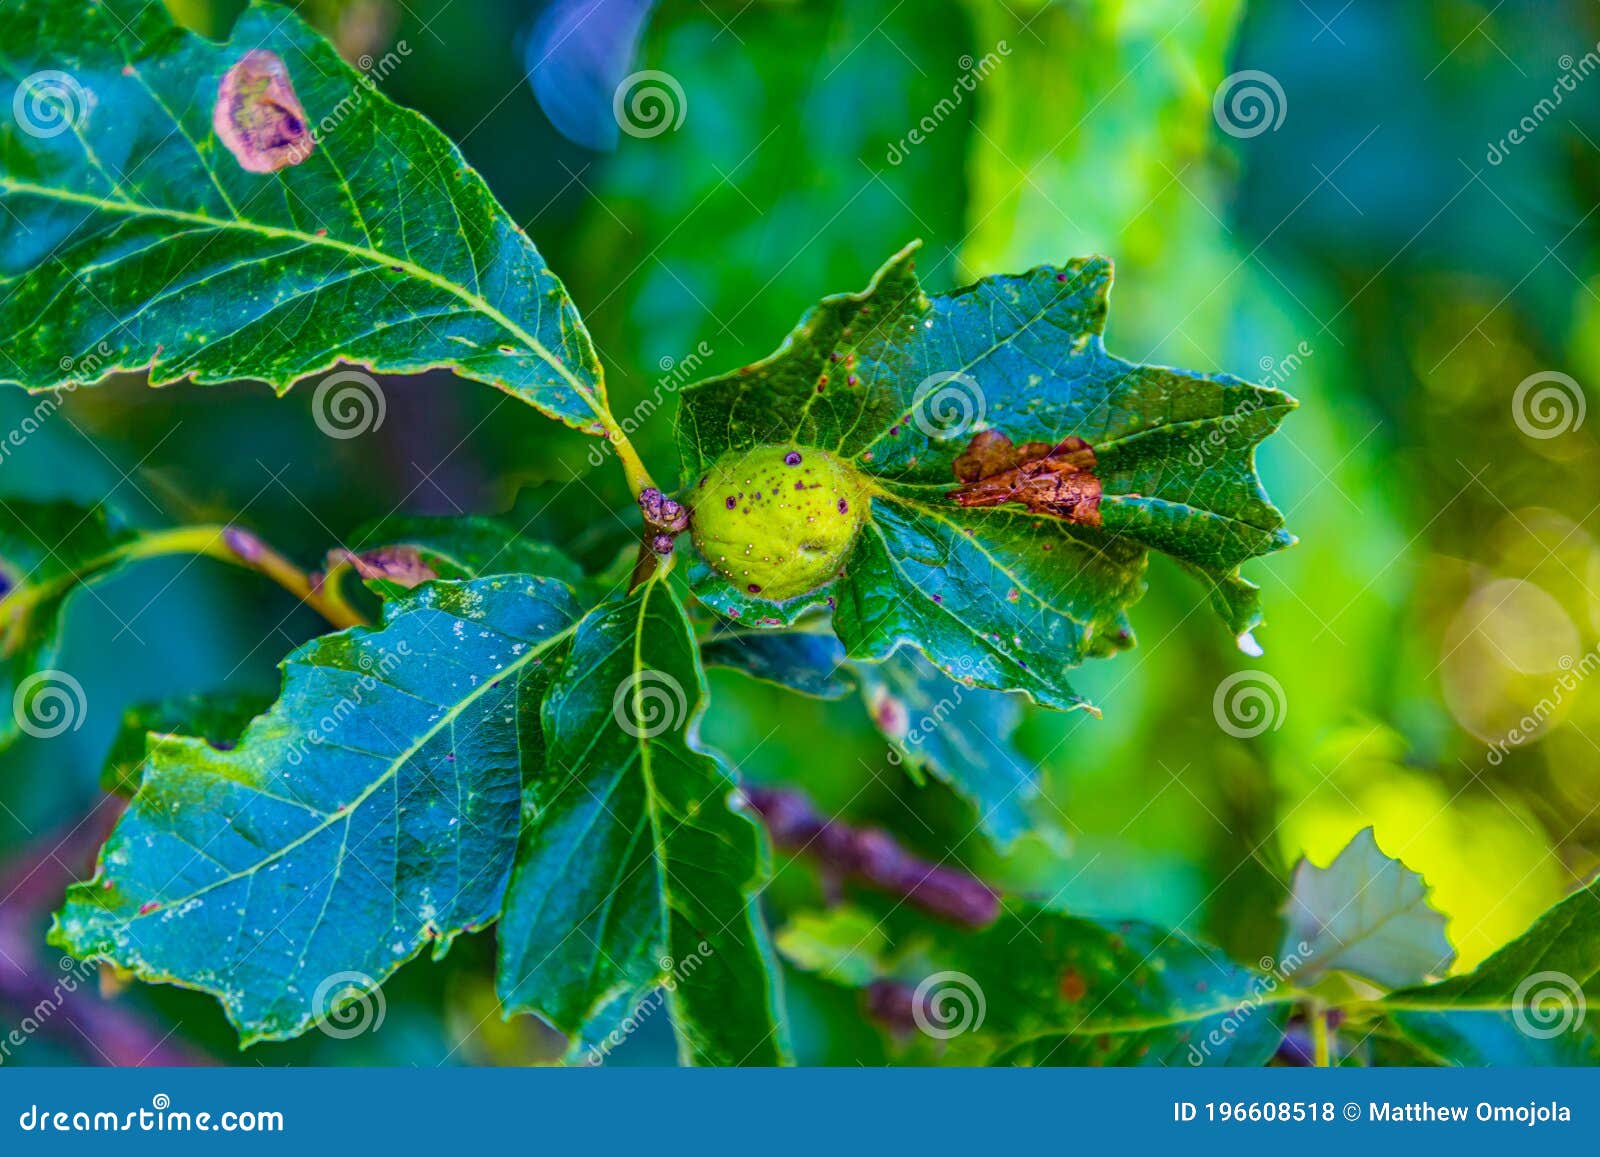 peculiar oak tree nodule on leaf